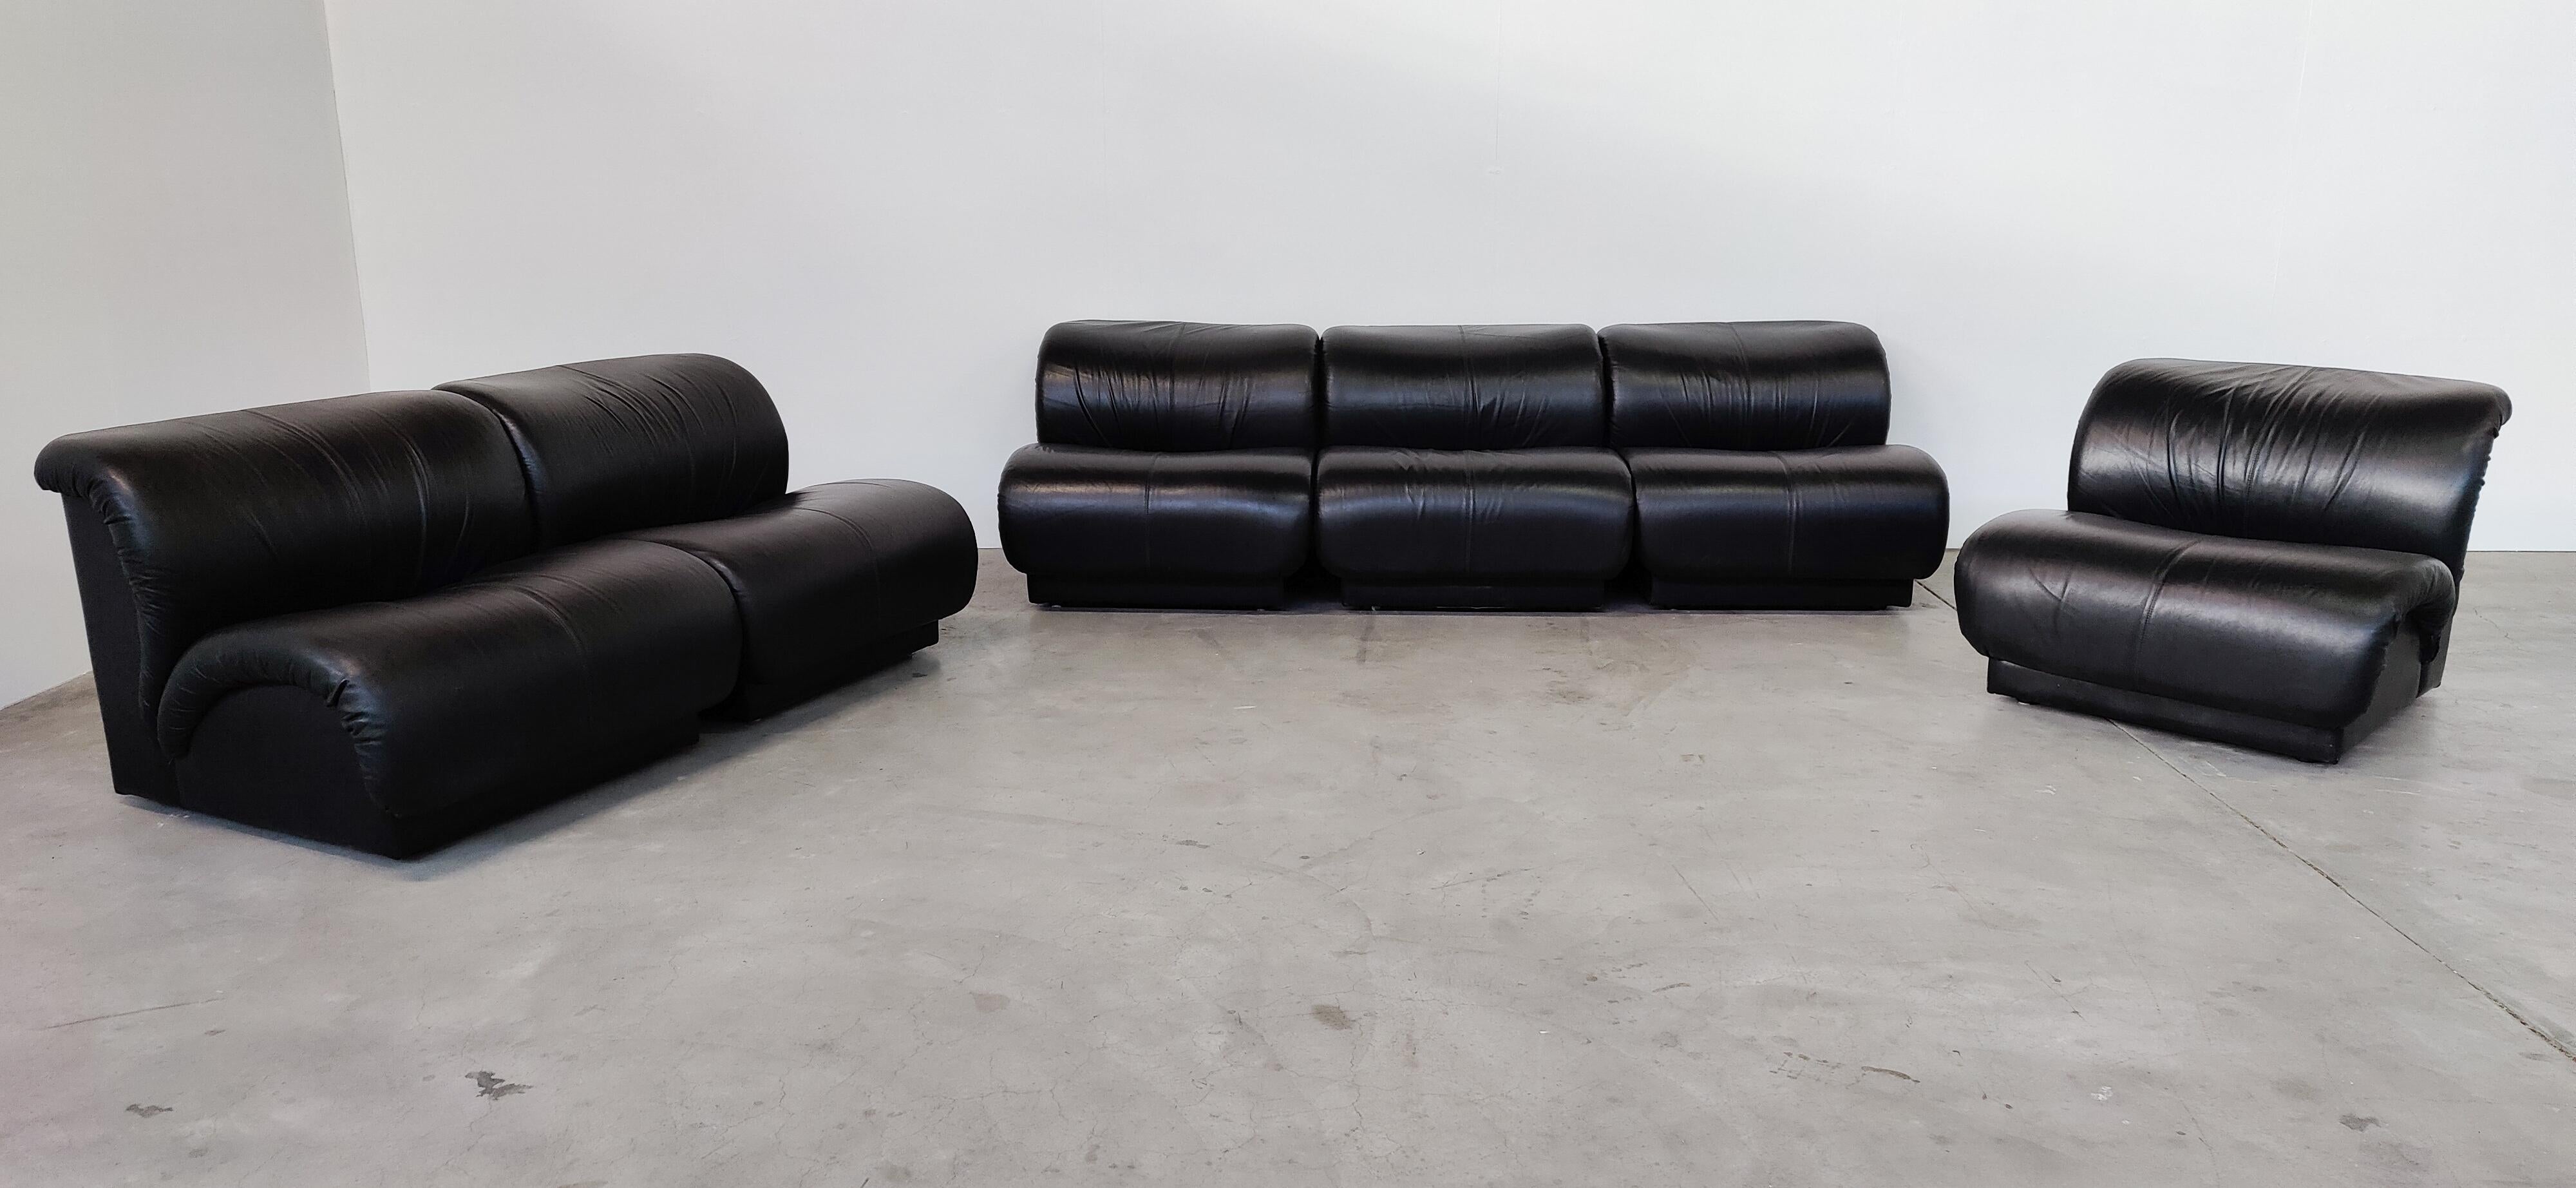 Late 20th Century Mid-Century Modern Black Leather Modular Sofa by Doimo Salotti, Italy, 1970s For Sale